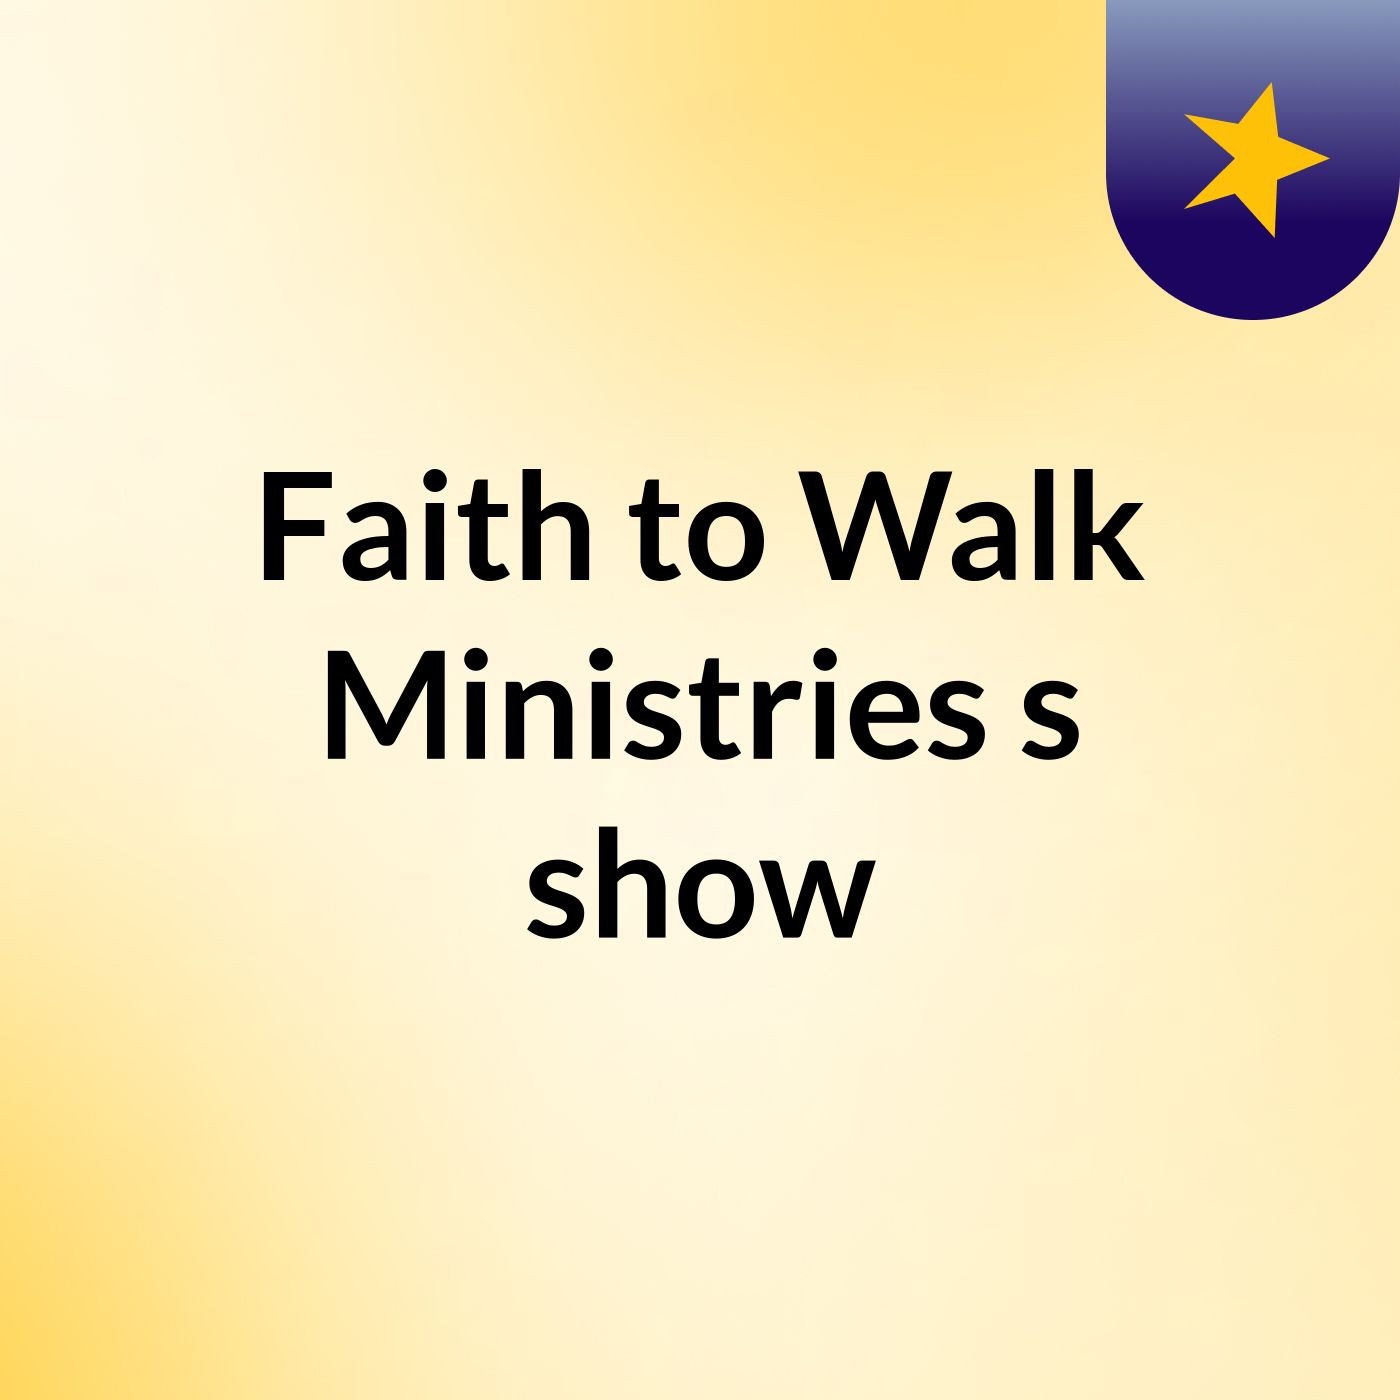 Faith to Walk Ministries's show